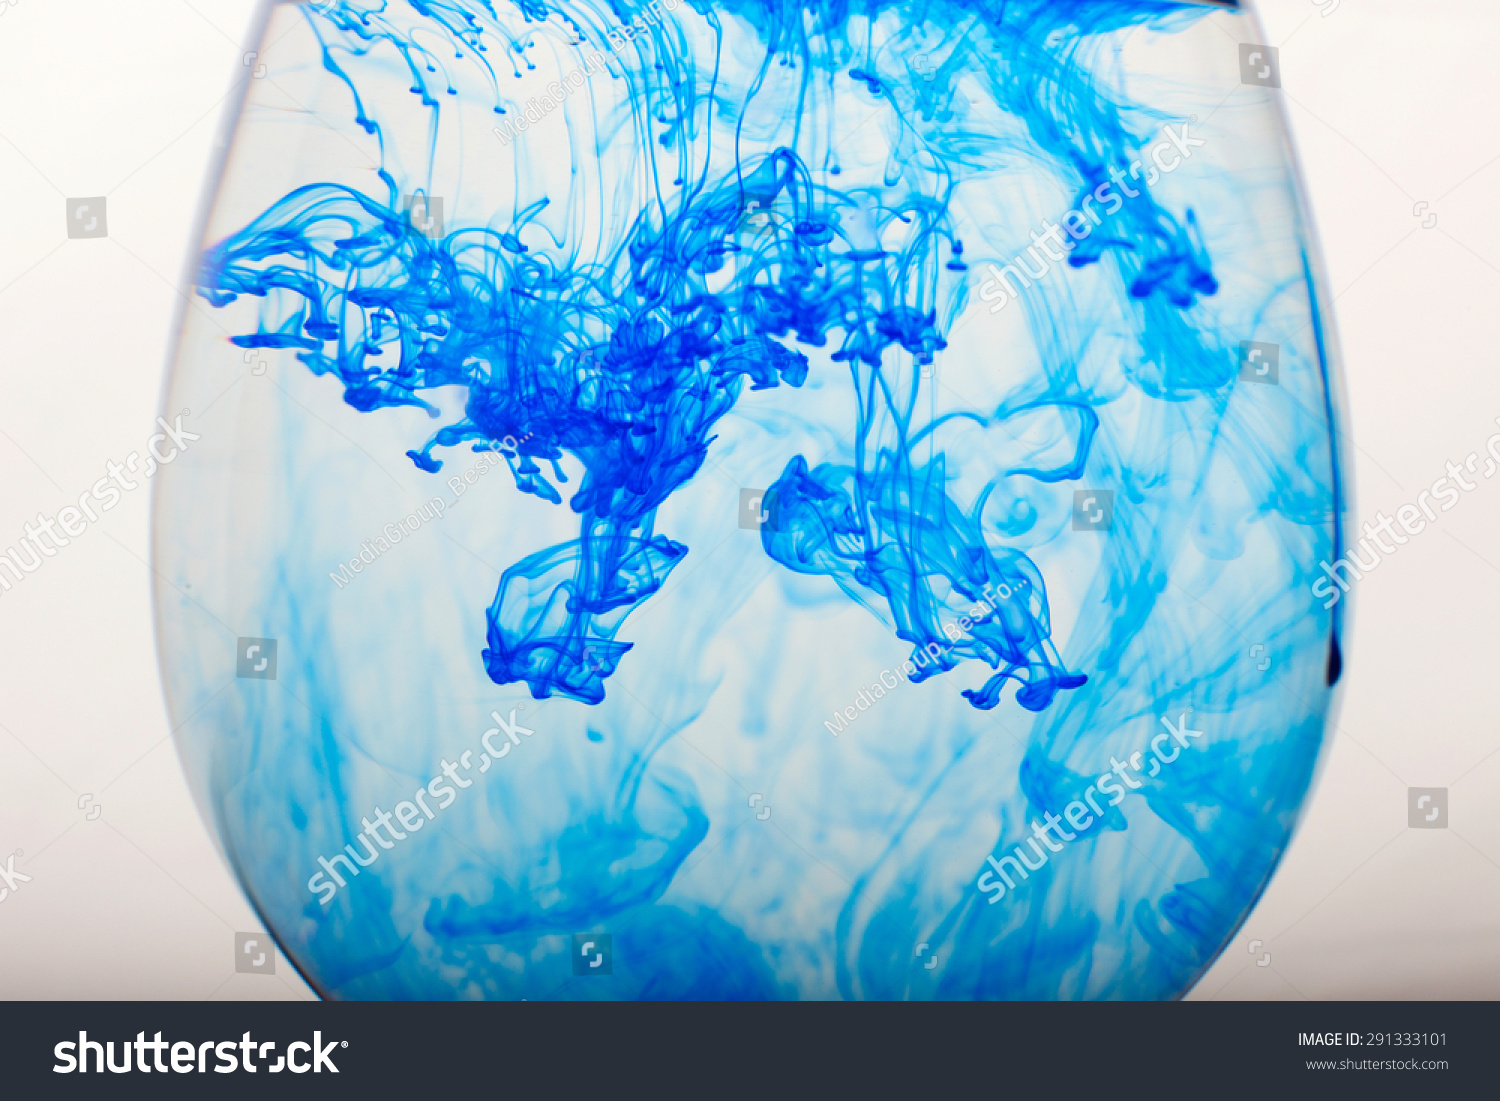 В сосуде смешали воду. Краска в воде. Диффузия краска в воде. Растворение краски в воде. Краска в стакане с водой.